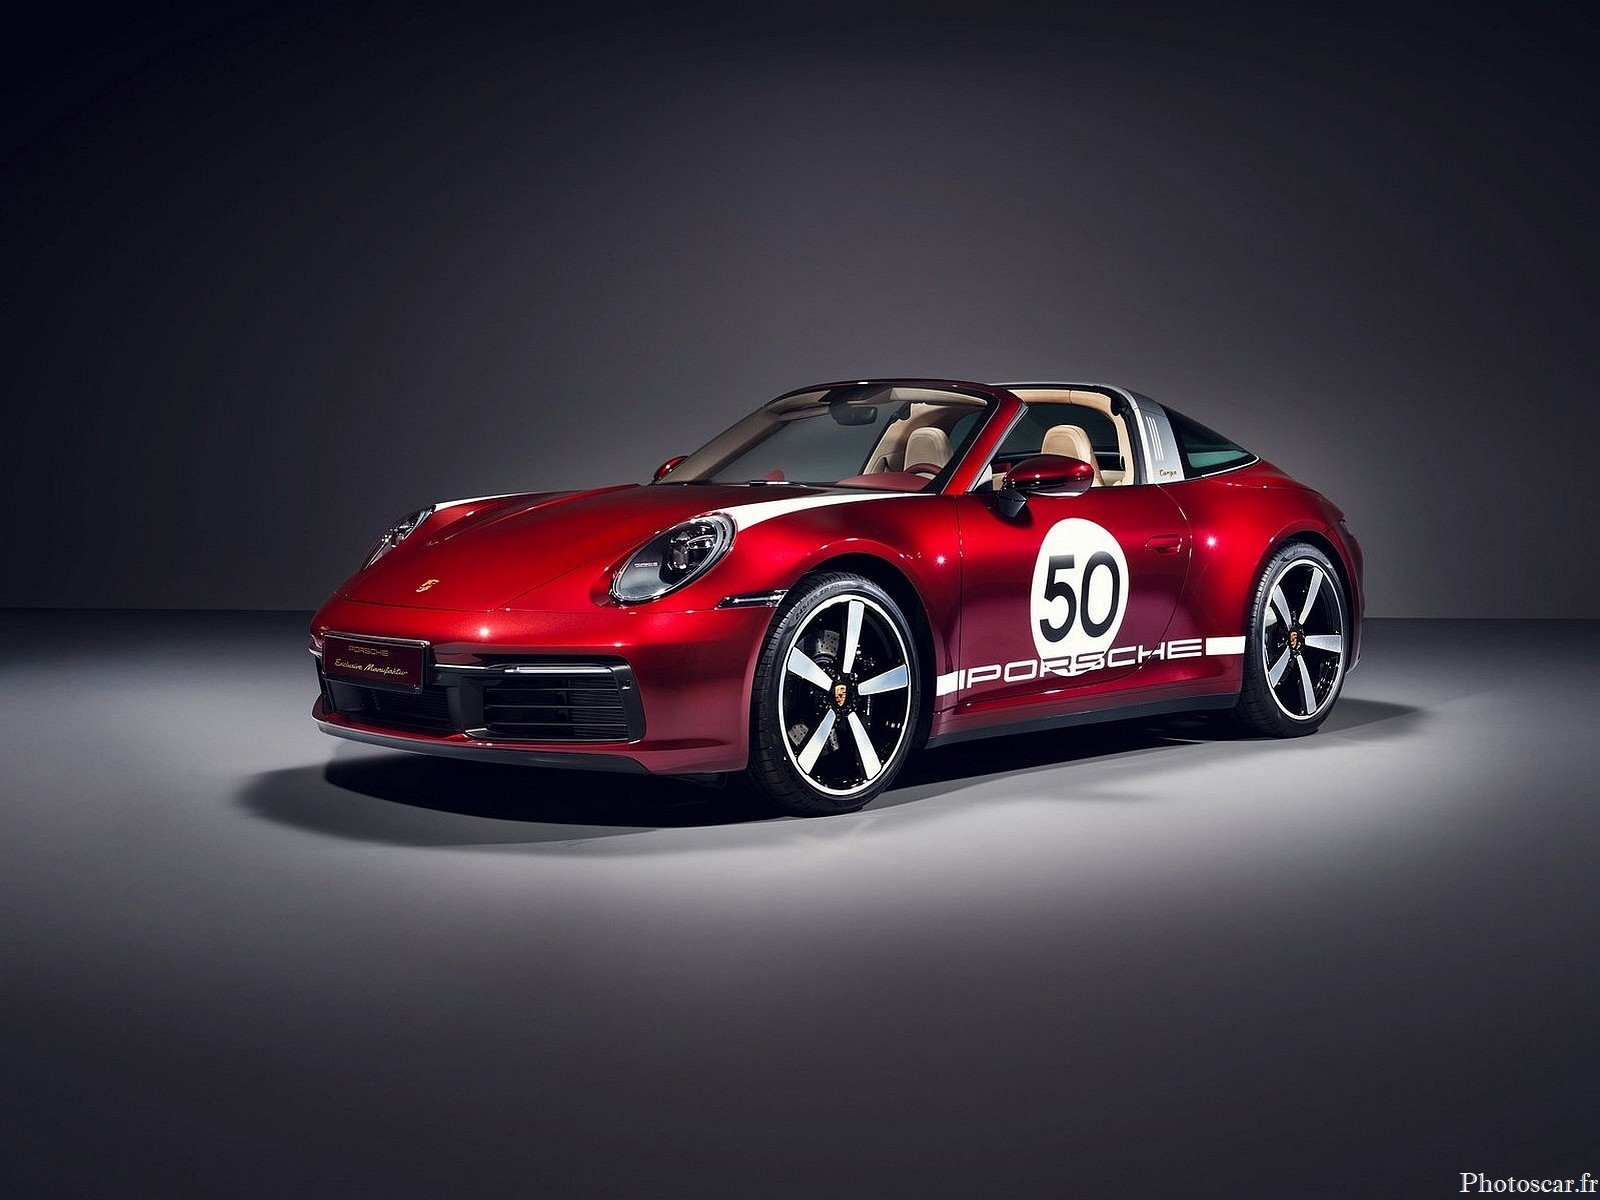 Porsche 911 Targa 4S Heritage Design Edition 2021 teintés de nostalgie